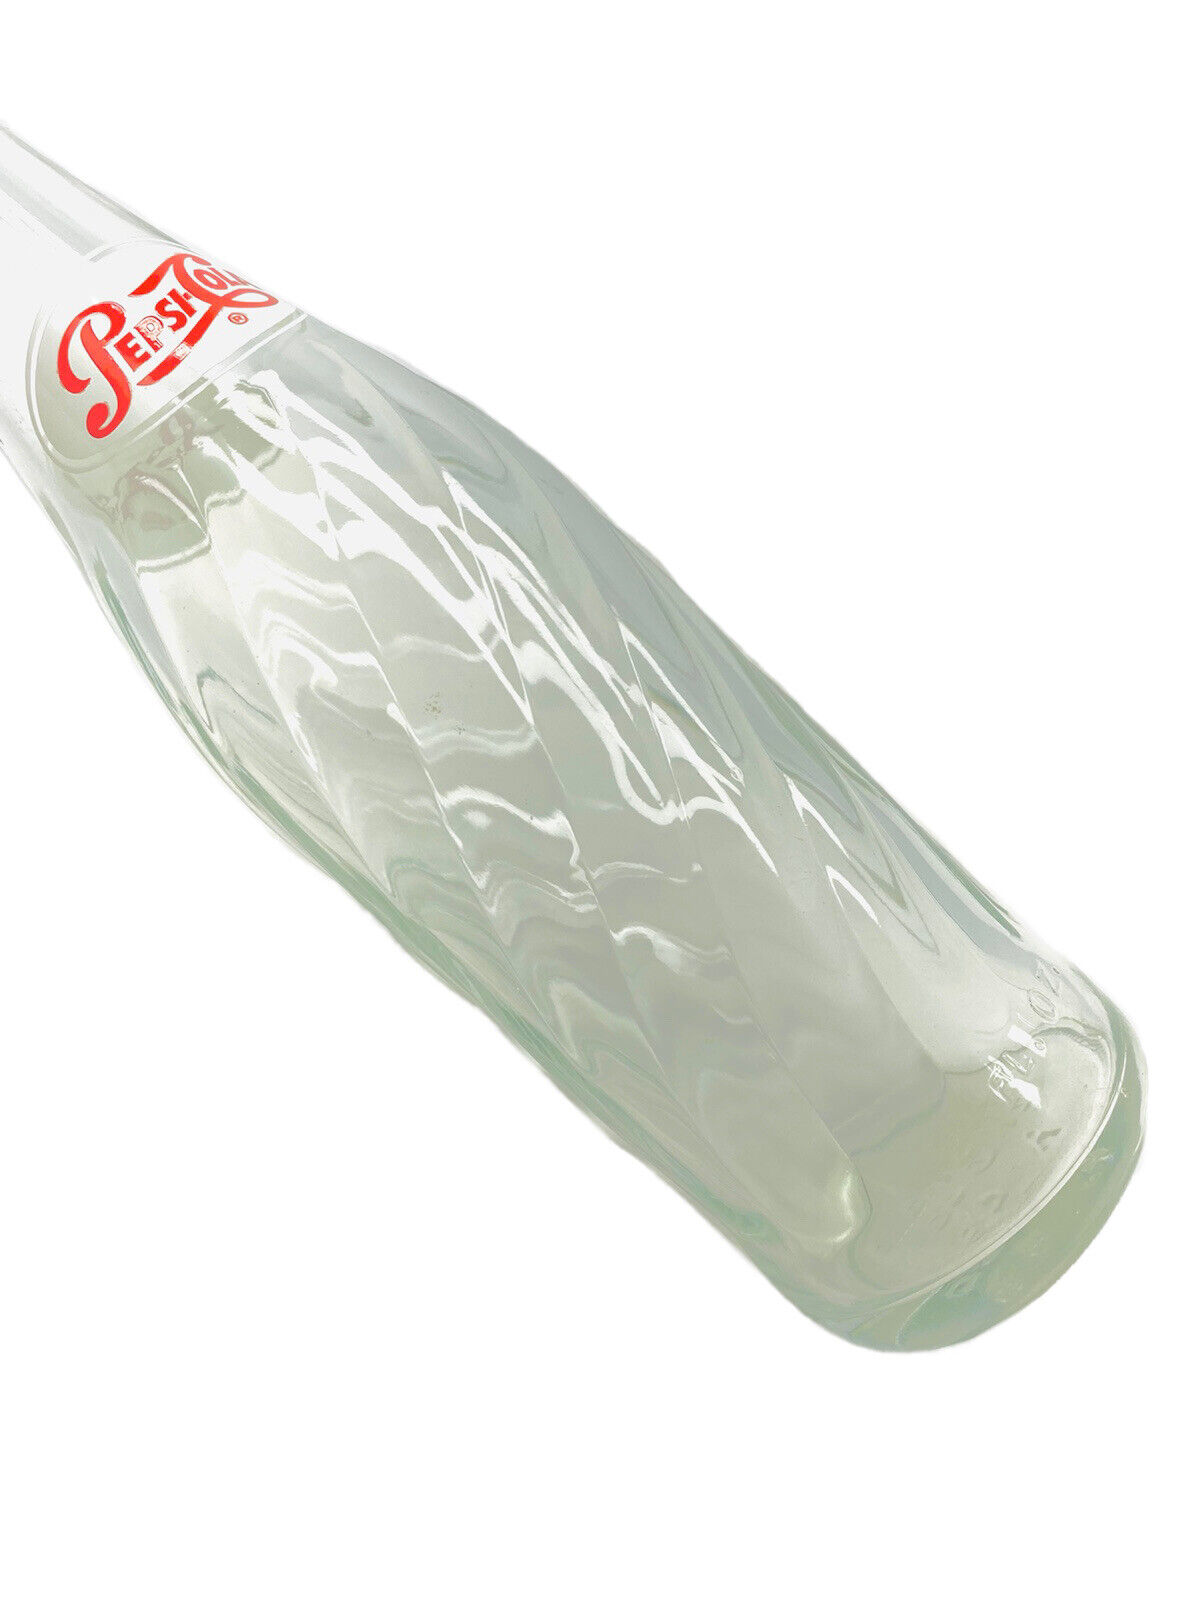 Extremely Rare Swirl 12oz. Pepsi Cola Glass Bottle Soda With Error Bubble Defect